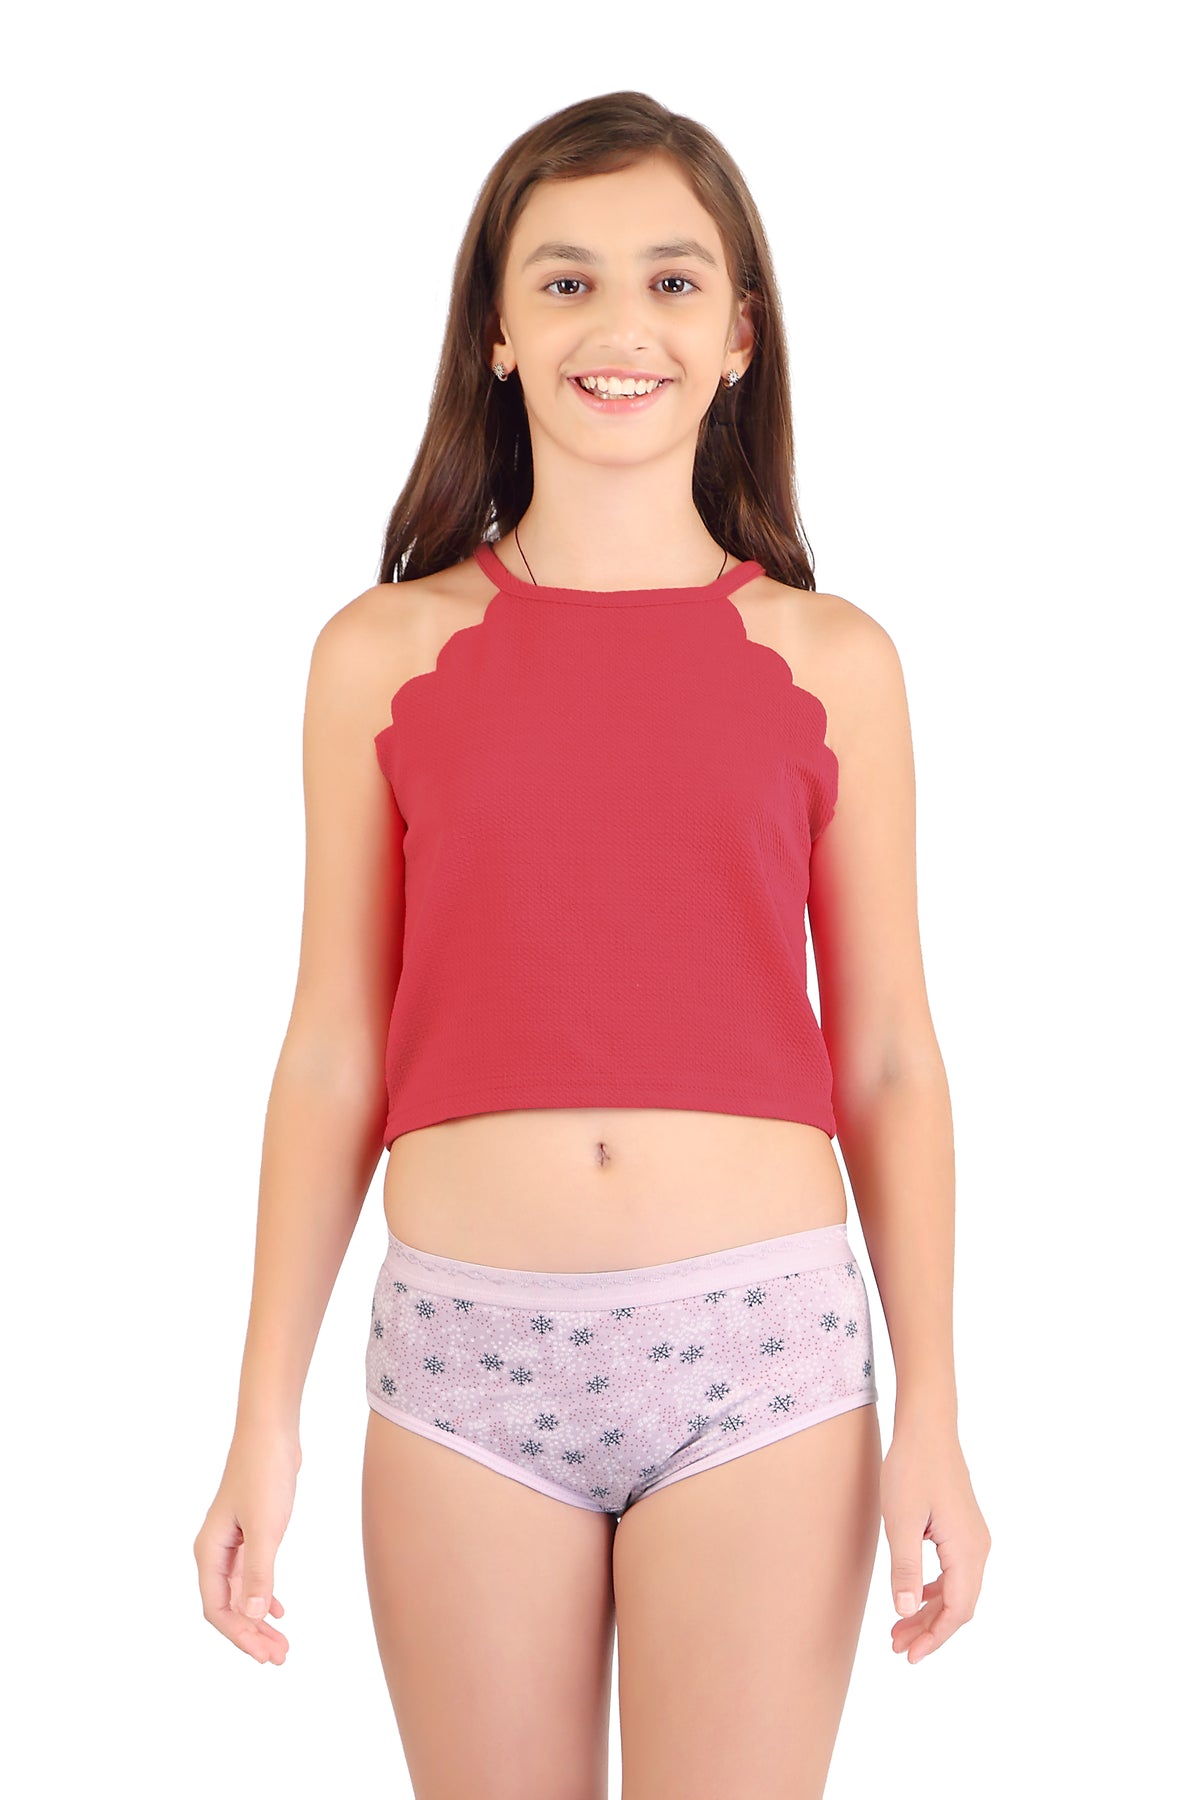 Everyday Essential Printed Teenage Girl Cotton Panty